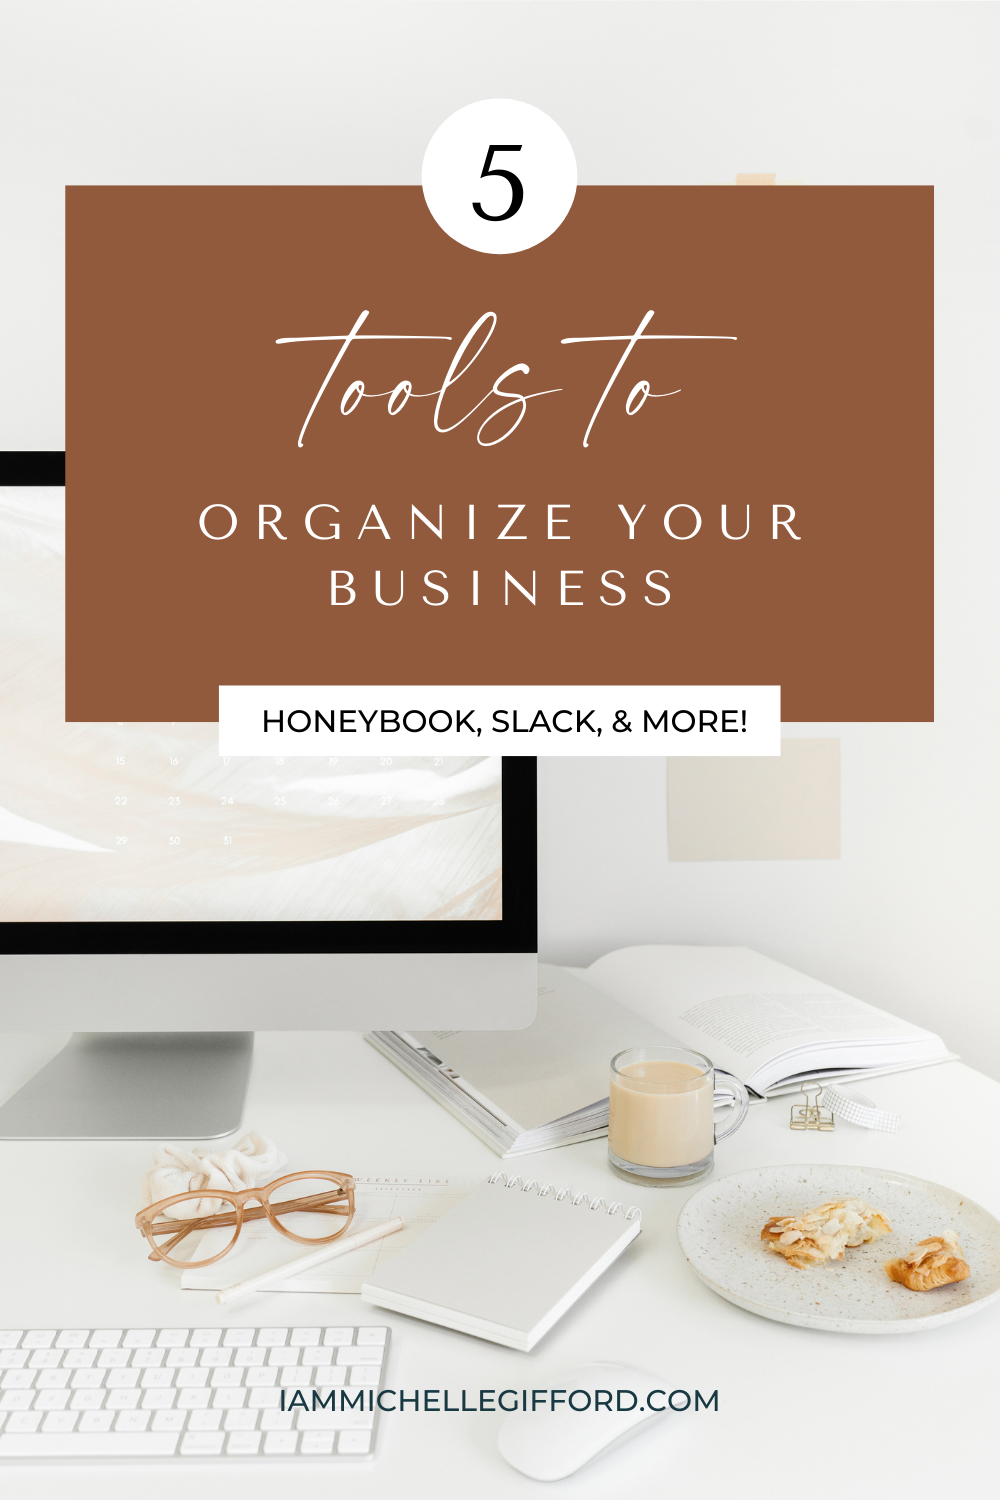 5 tools to organize your business iammichellegifford.com.